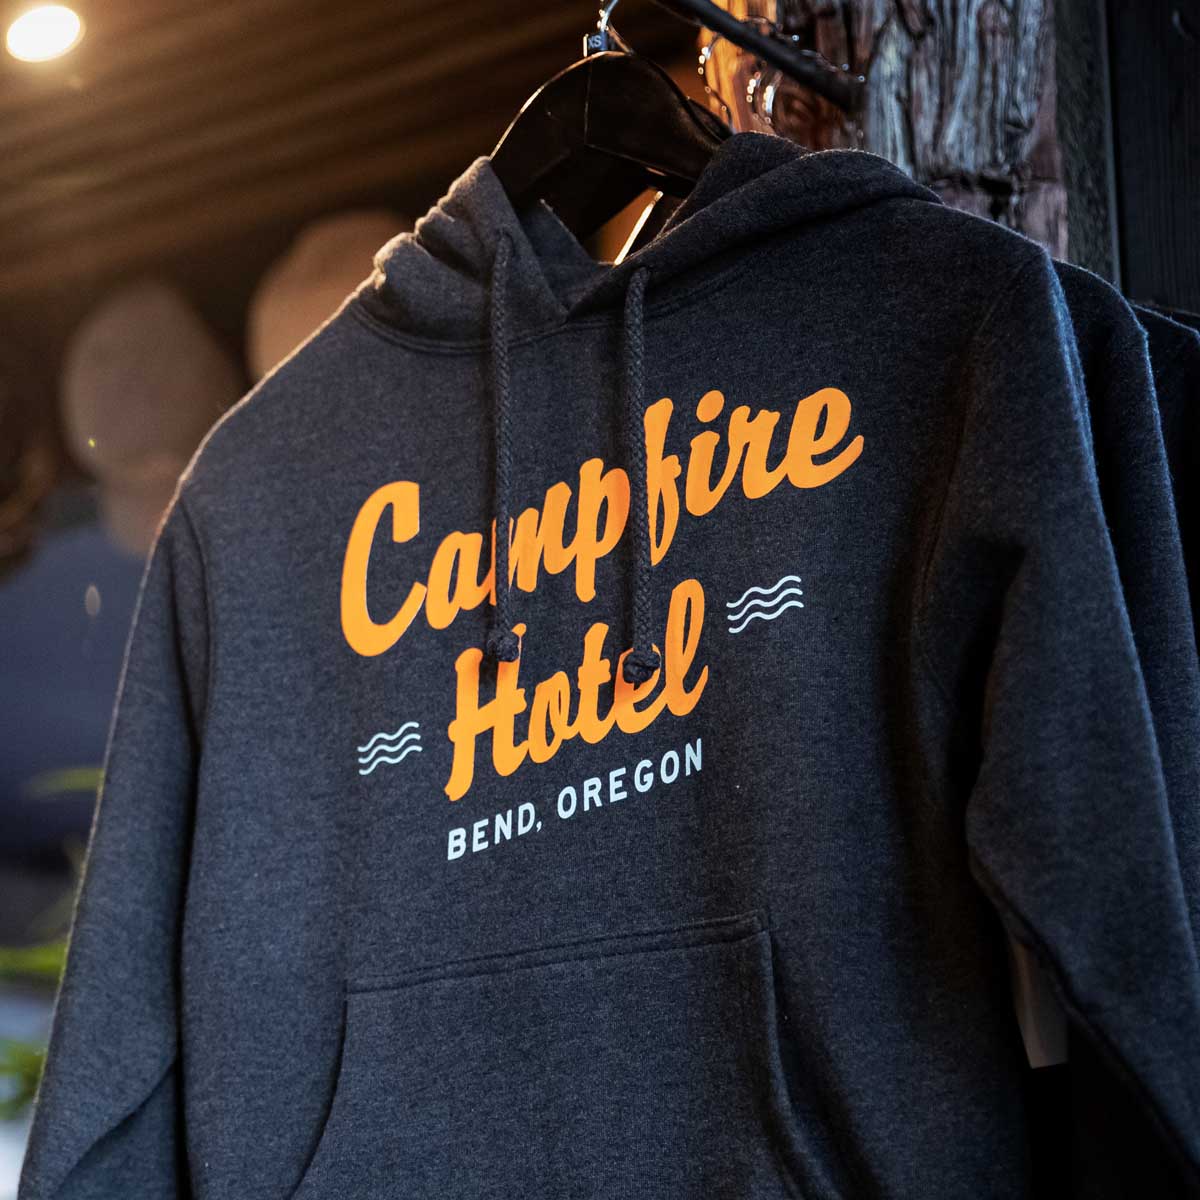 campfire hotel screen printed sweatshirt